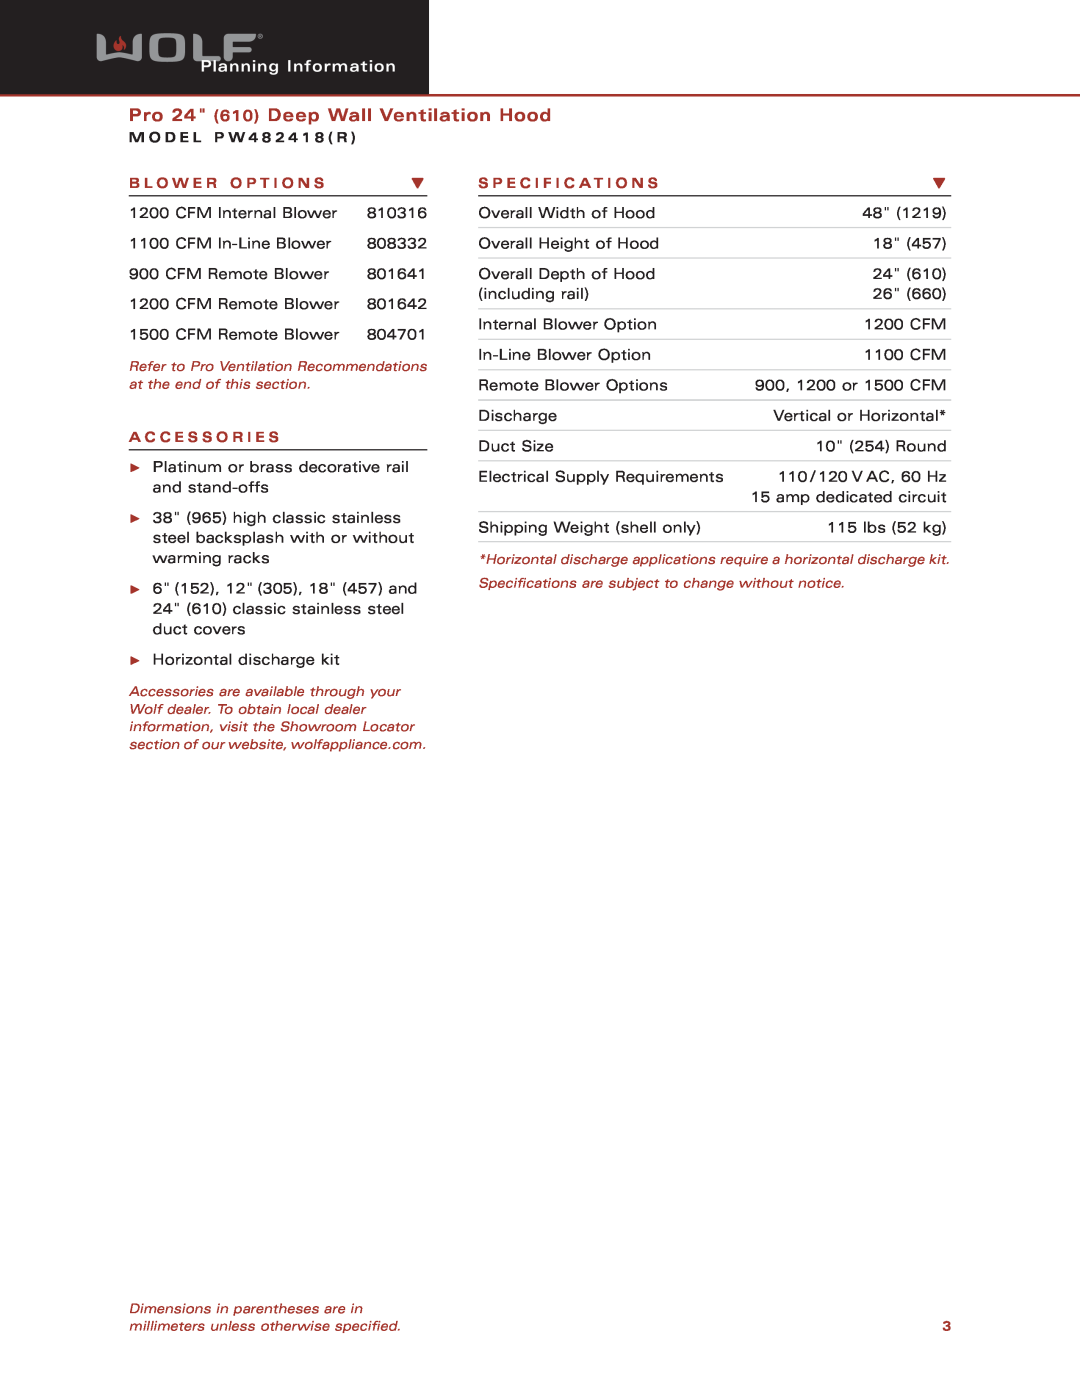 Wolf Appliance Company PW482418R Planning Information, Pro 24 610 Deep Wall Ventilation Hood M O D E L P W 4 8 2 4 1 8 R 